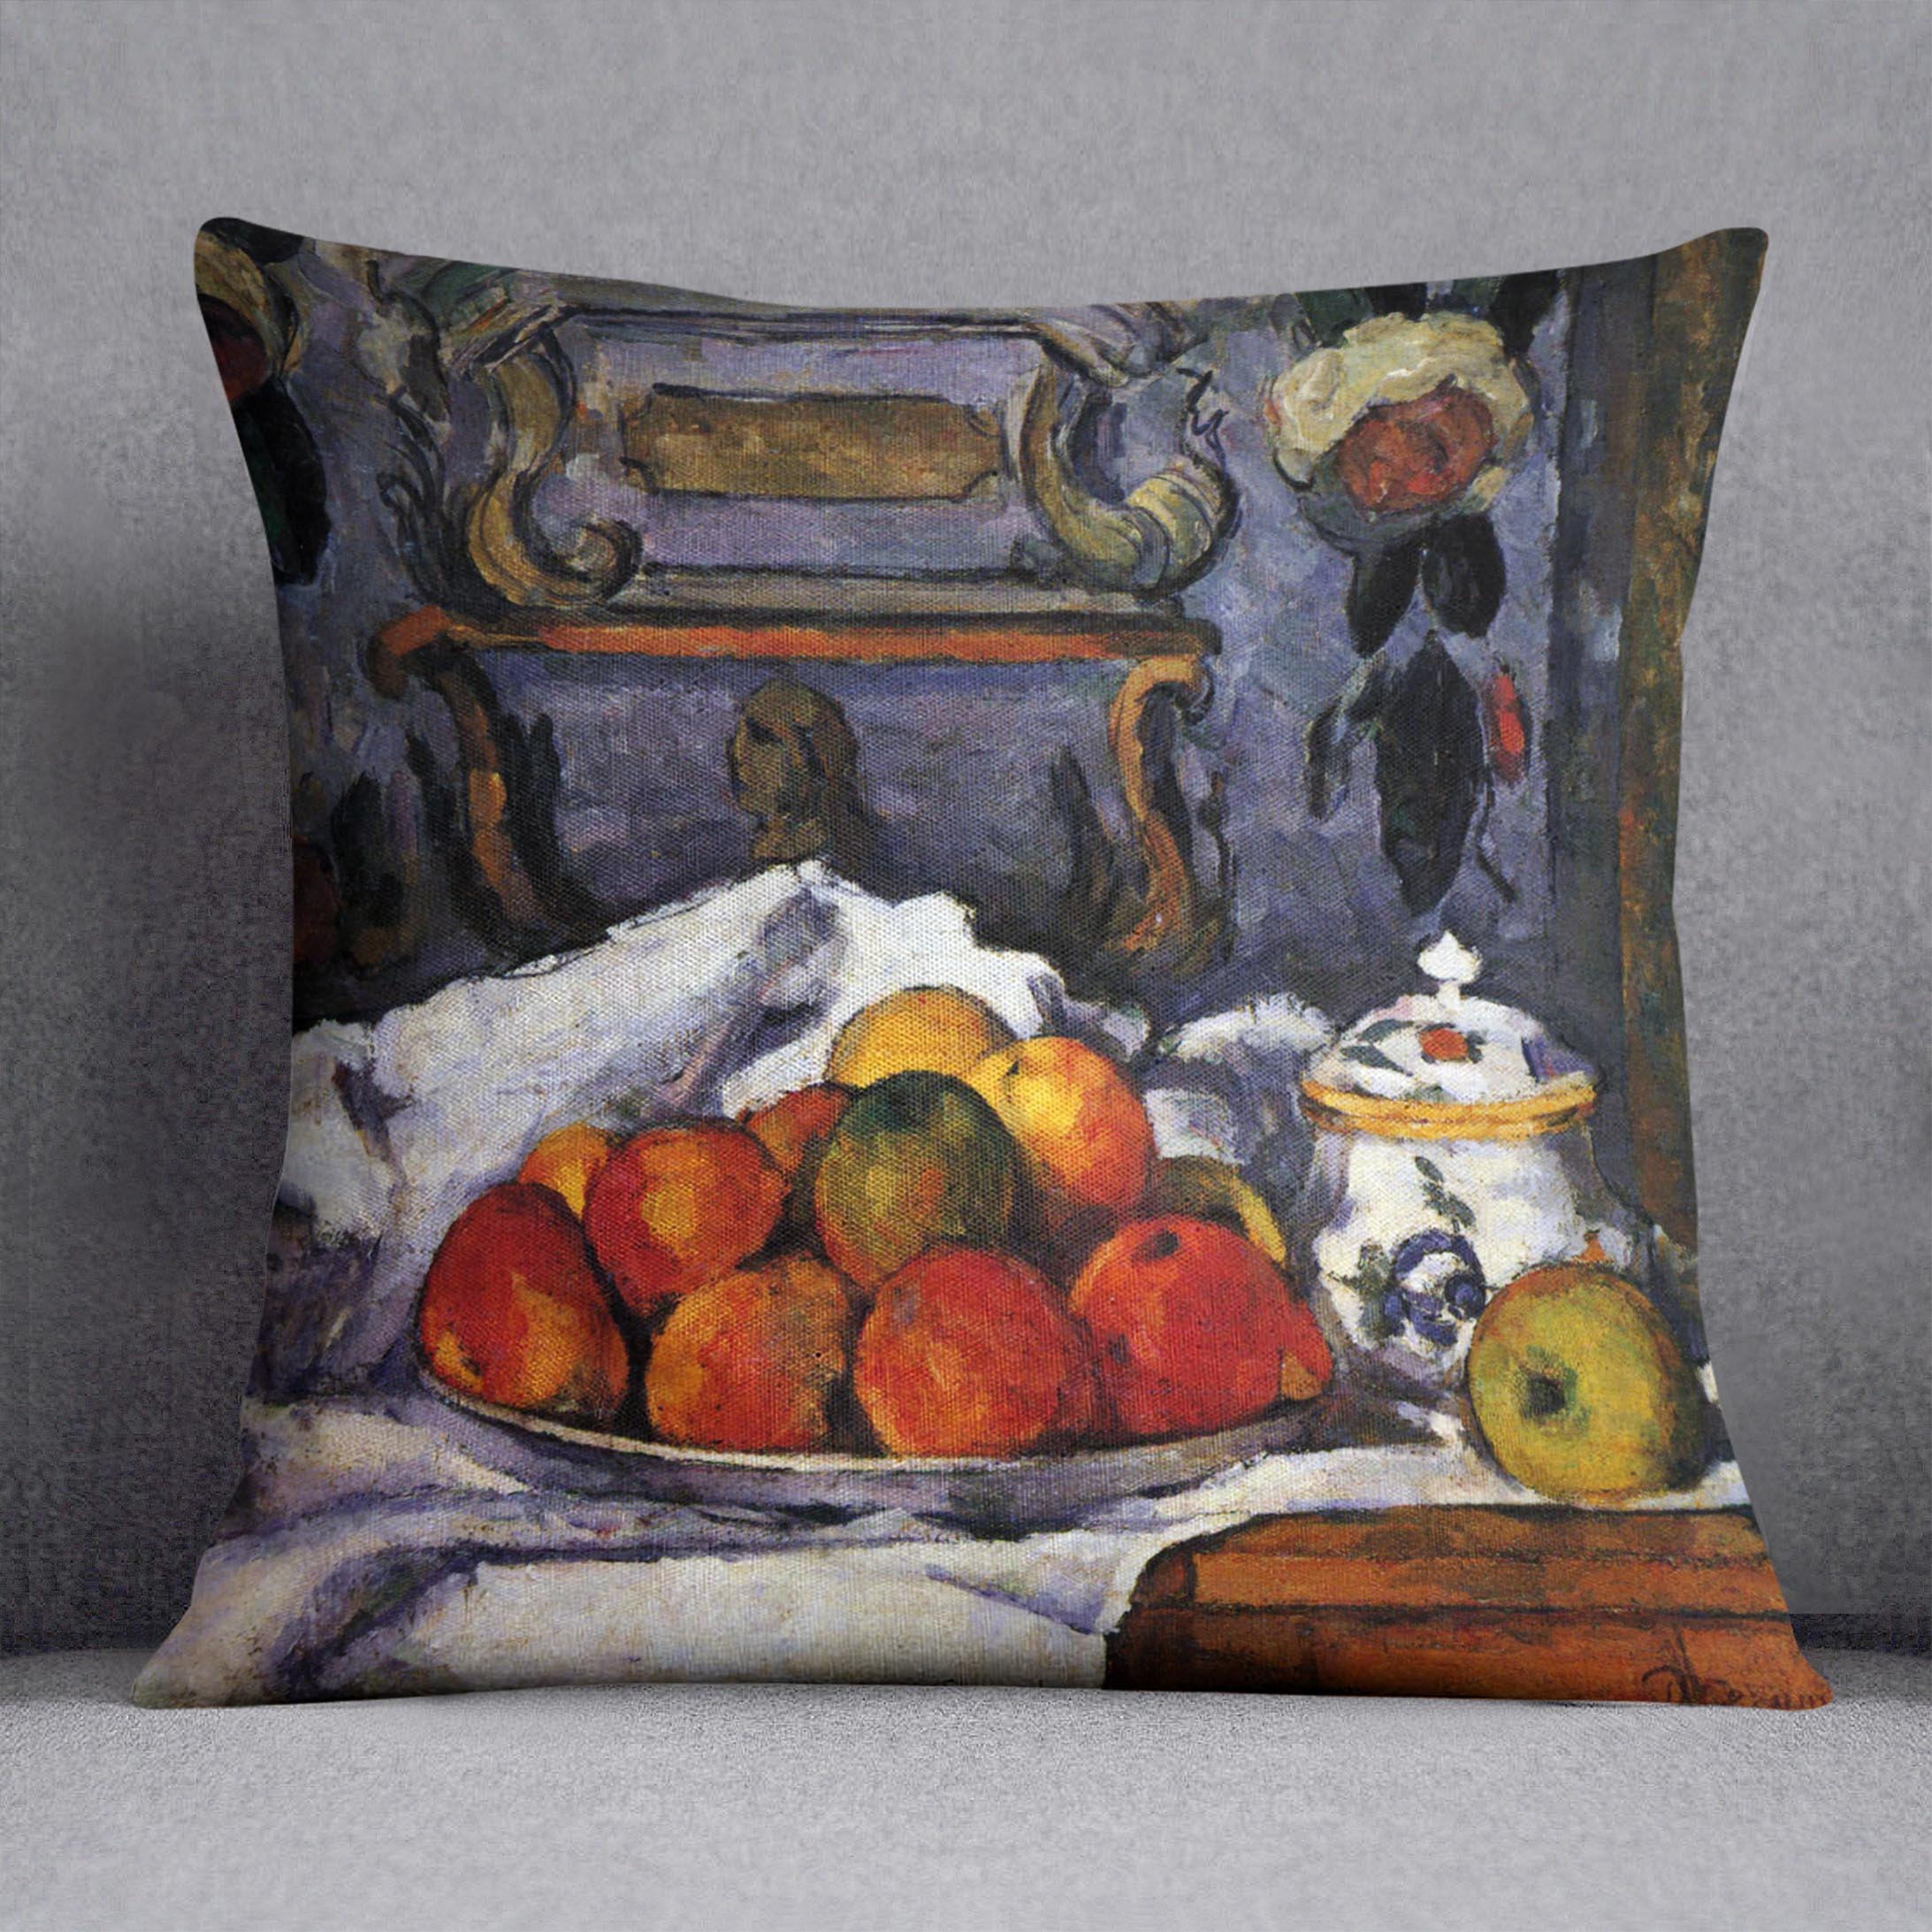 Still life bowl of apples by Cezanne Cushion - Canvas Art Rocks - 1